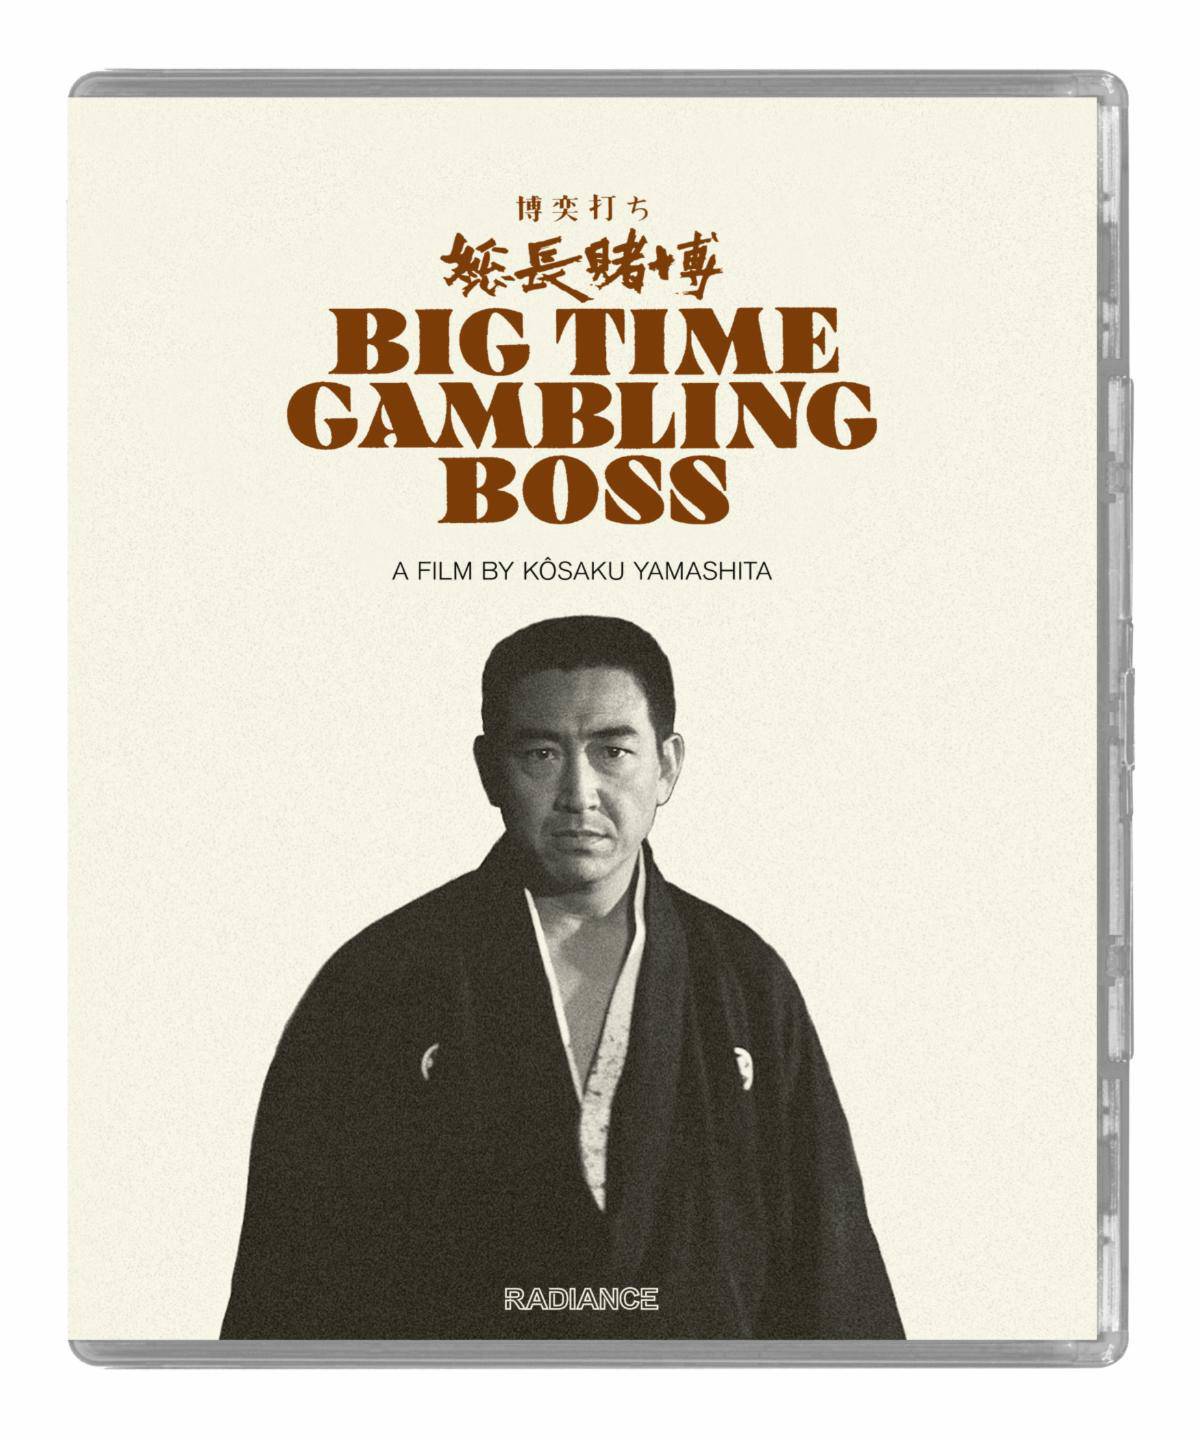 Big Time Gambling Boss makes its Blu-ray debut beginning the Radiance era on Jan 3rd! 2